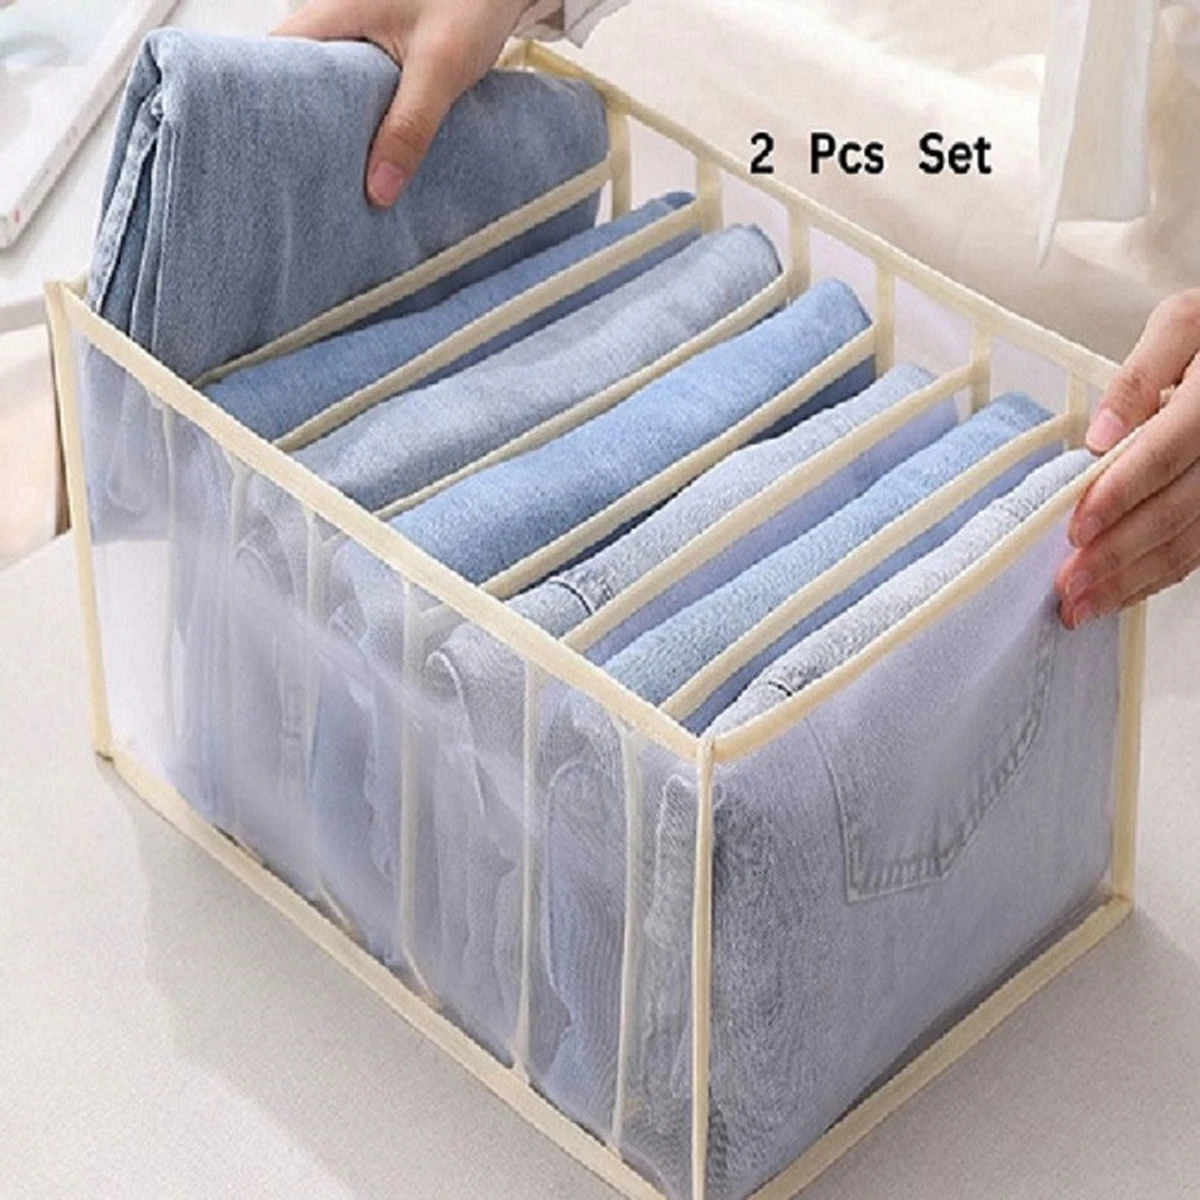 2 pcs set Jeans Organization Storage Box